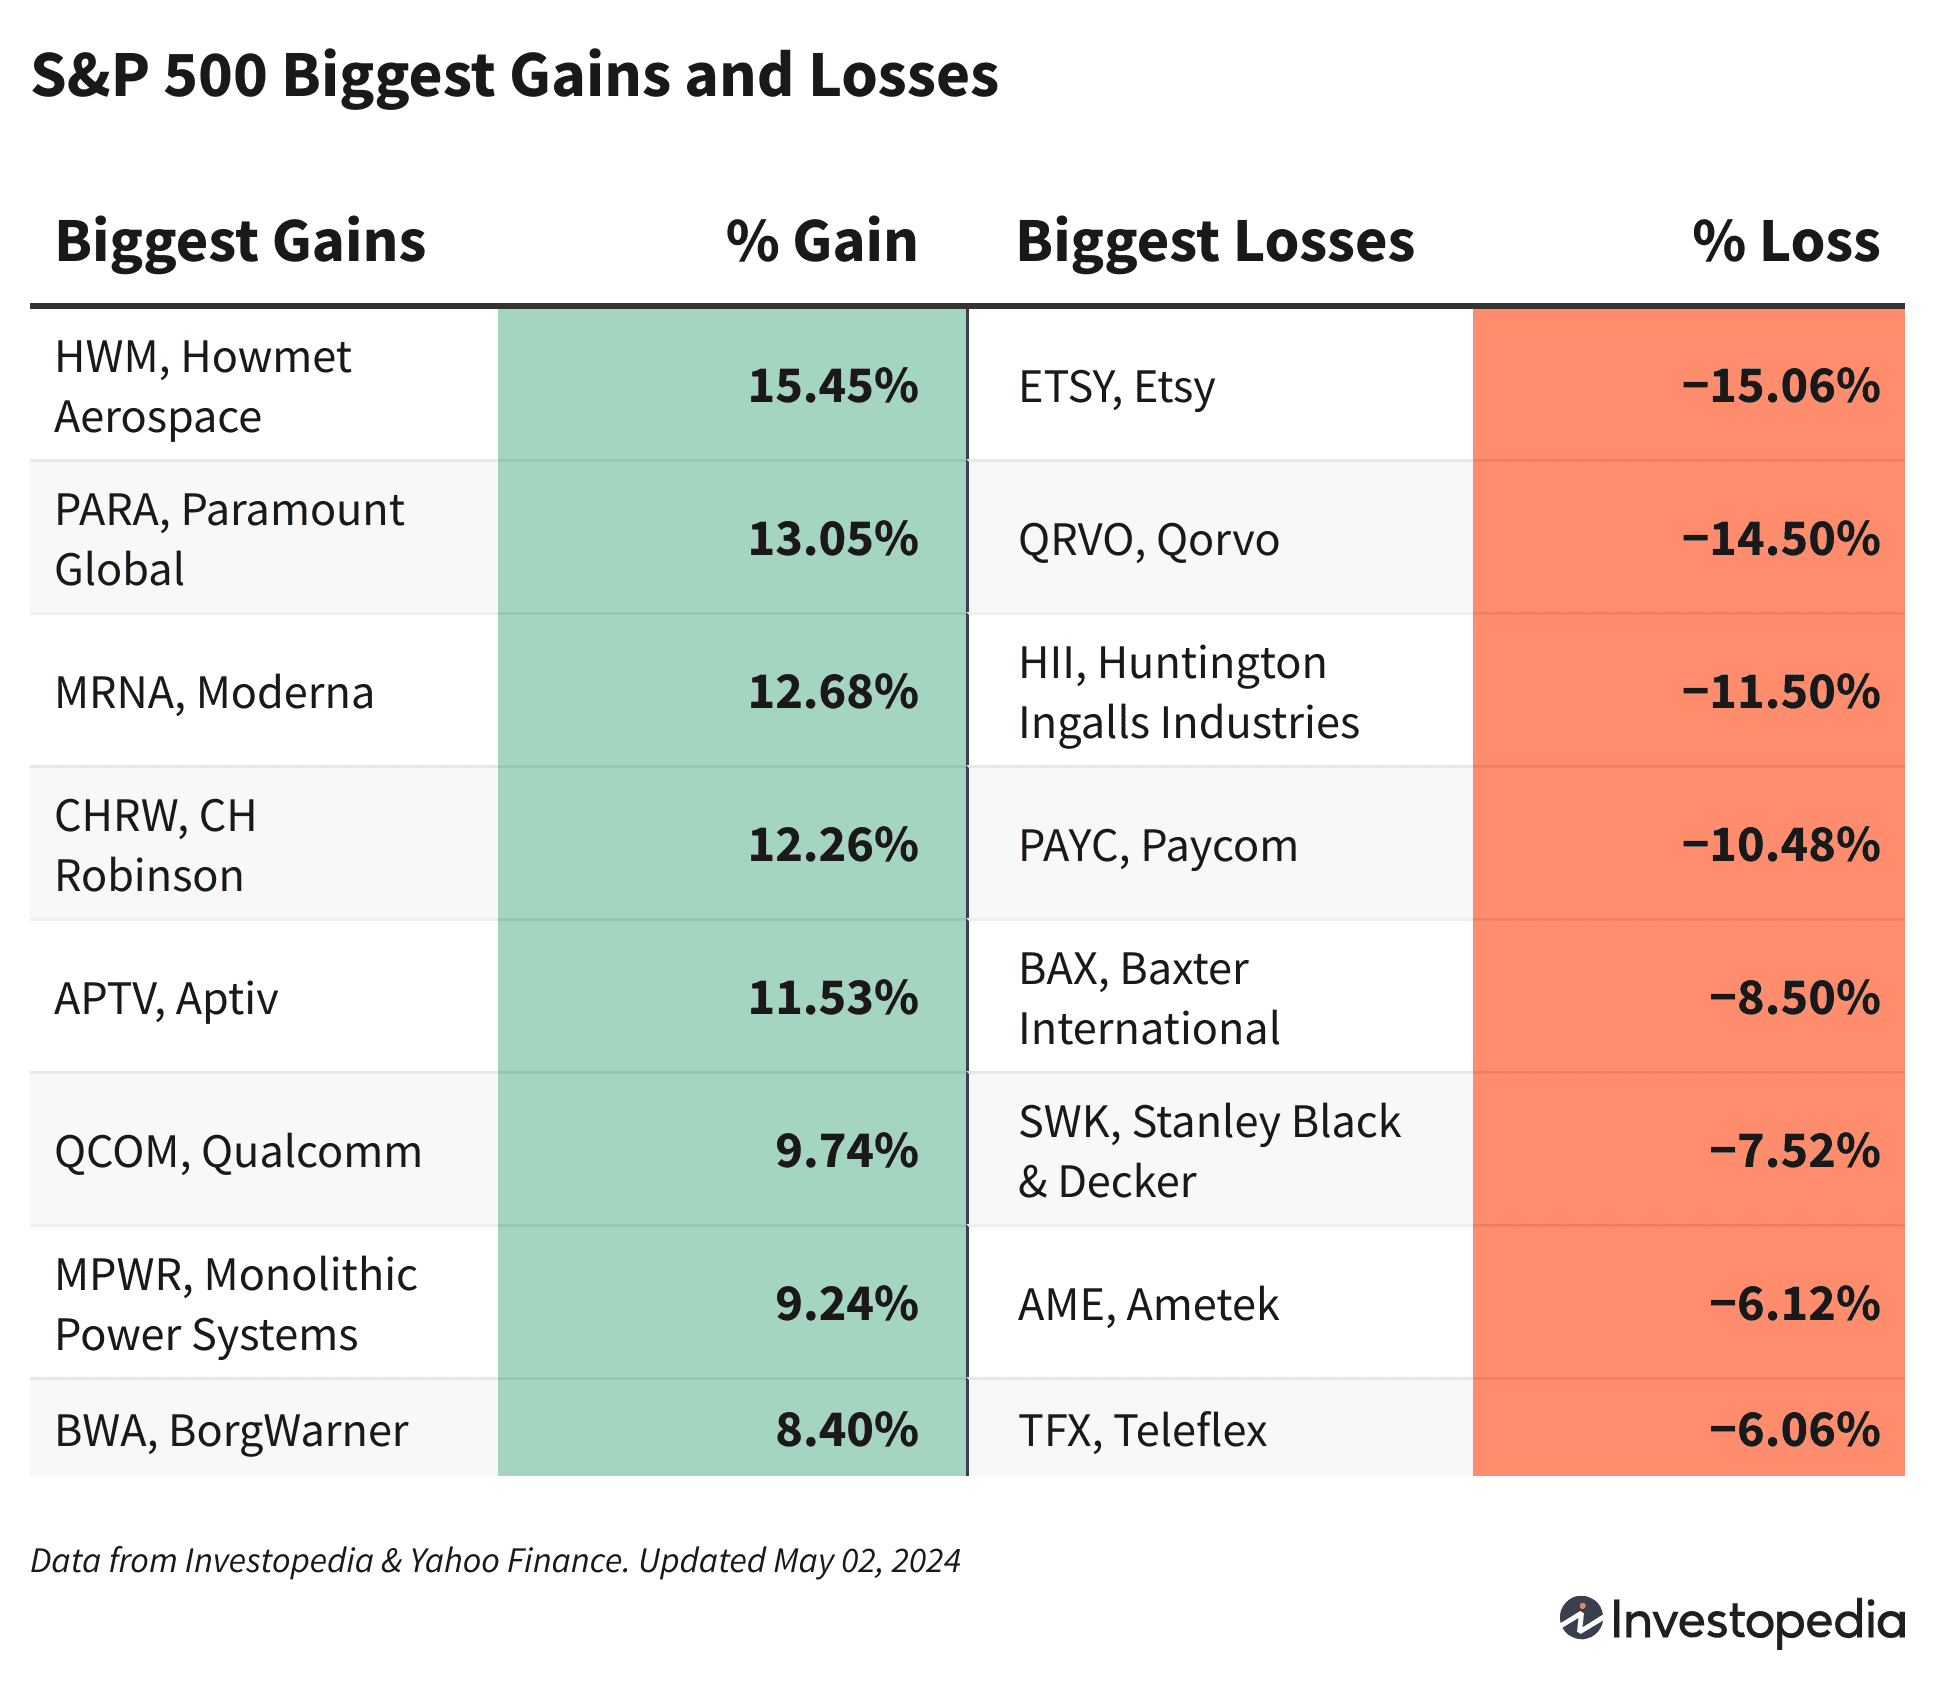 S&P 500 Biggest Gains and Losses May 2, 2024